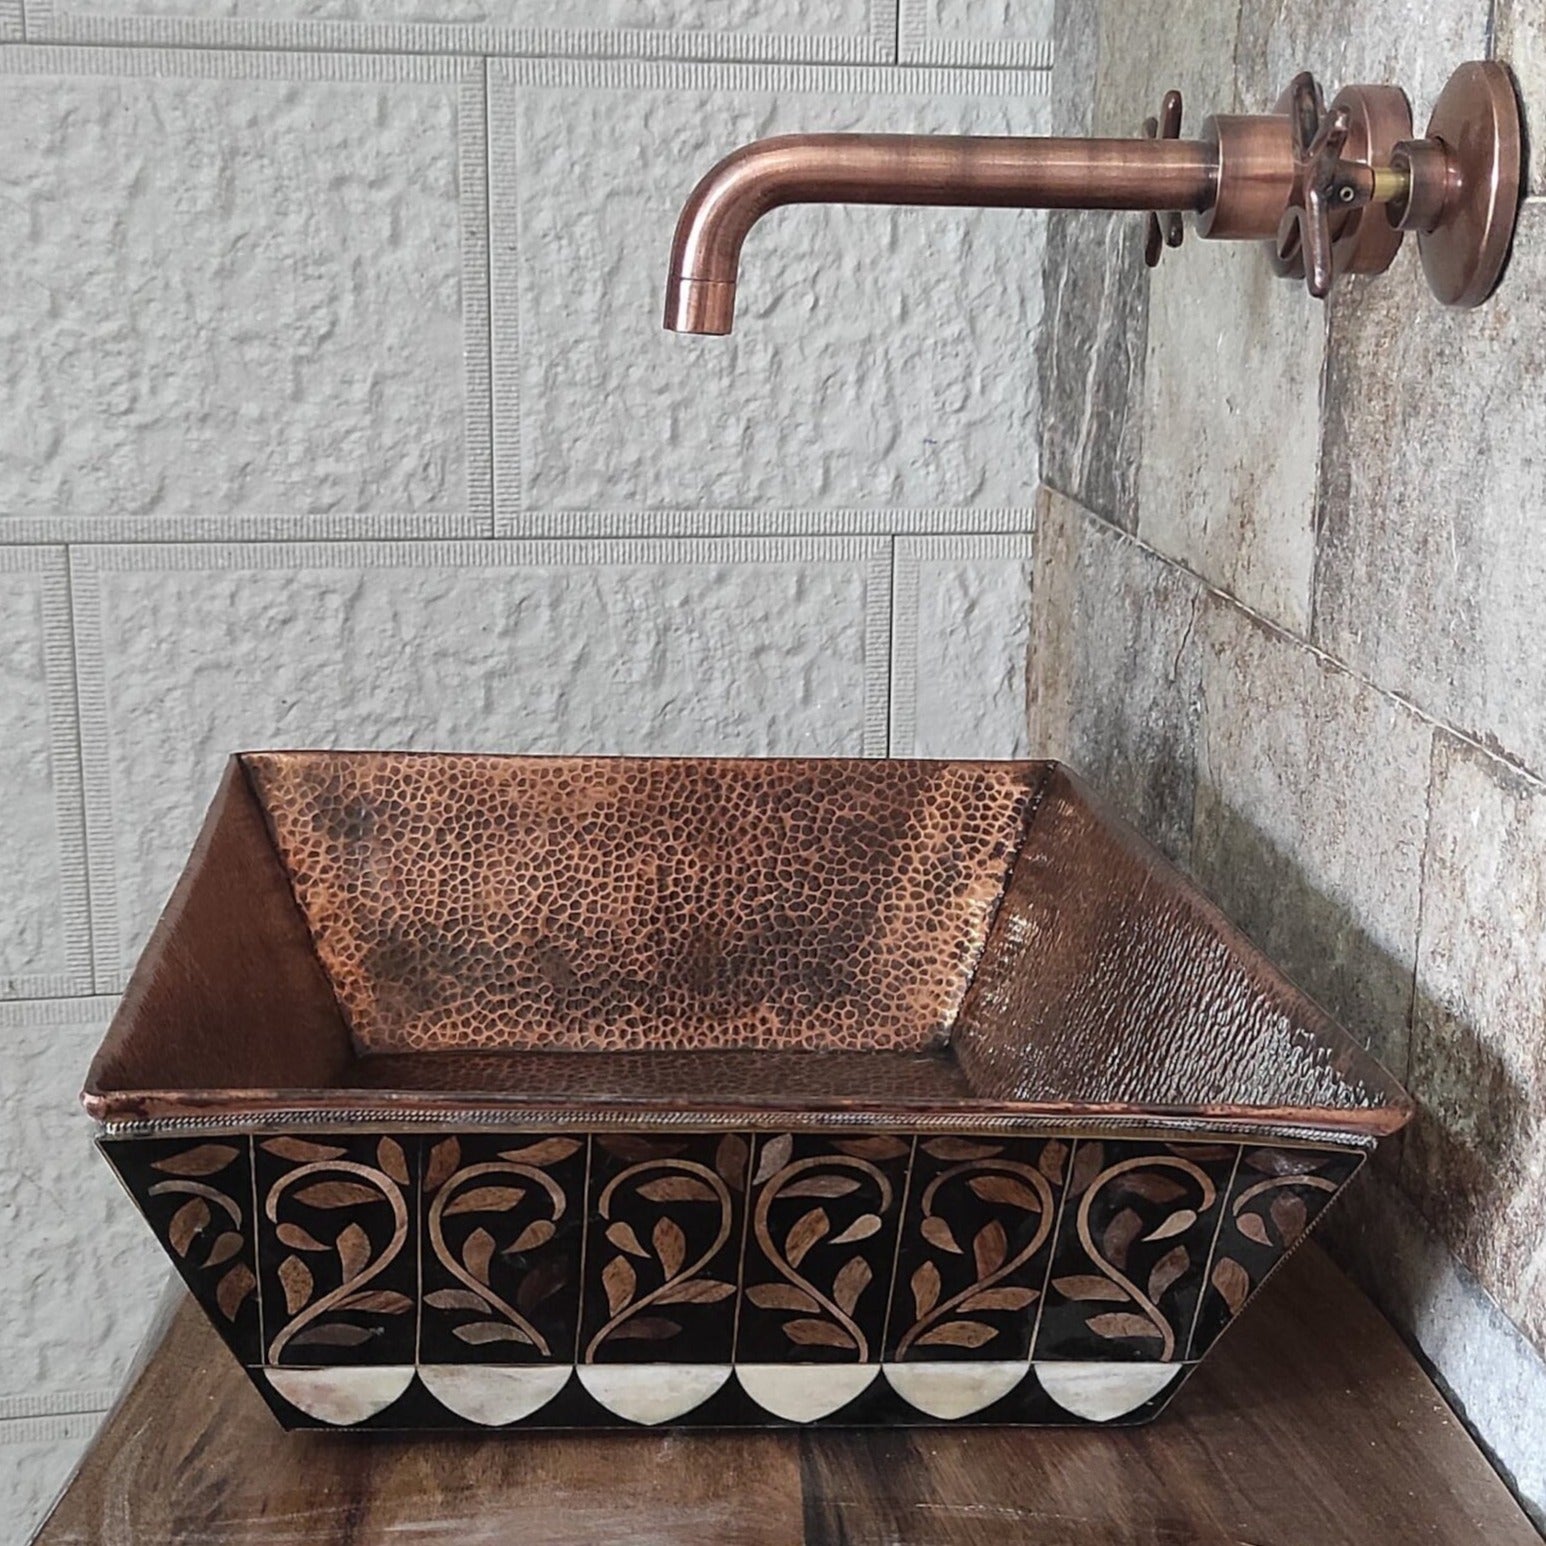 Antique Copper Sink - Farmhouse Vessel Sink - Bar Sink